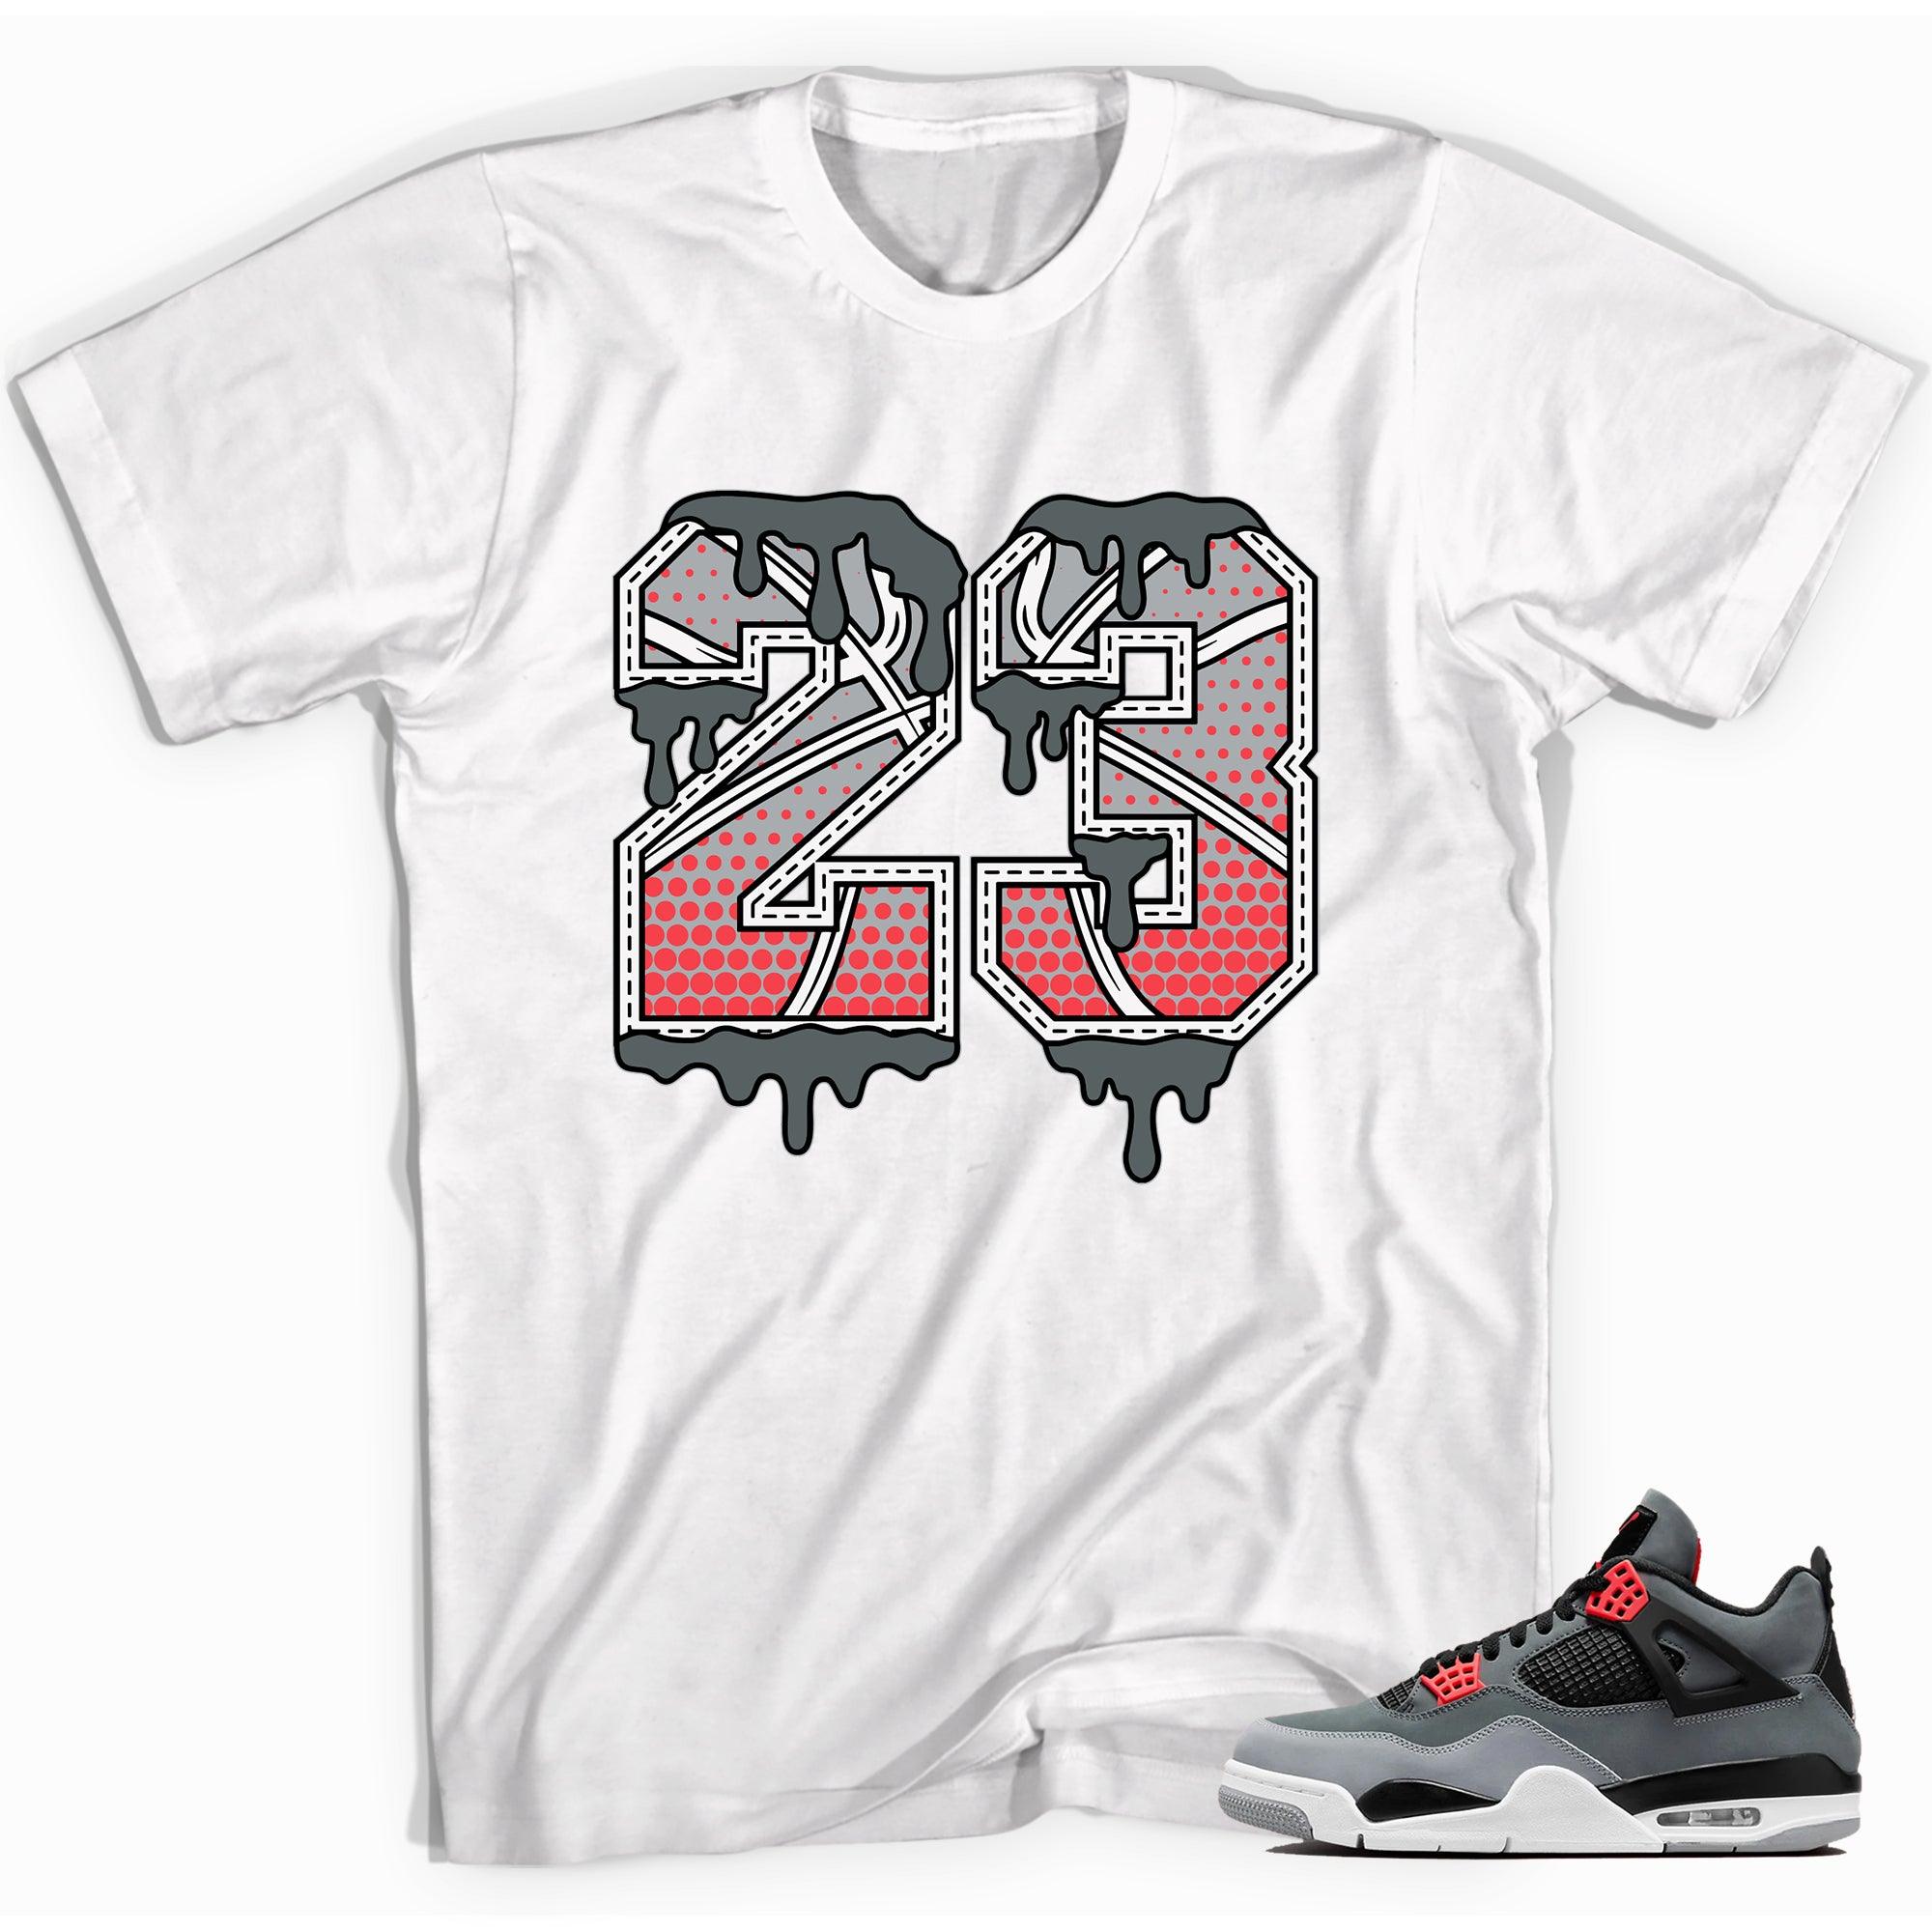 White 23 Drip Sneaker Shirt Jordan 4s Infrared photo